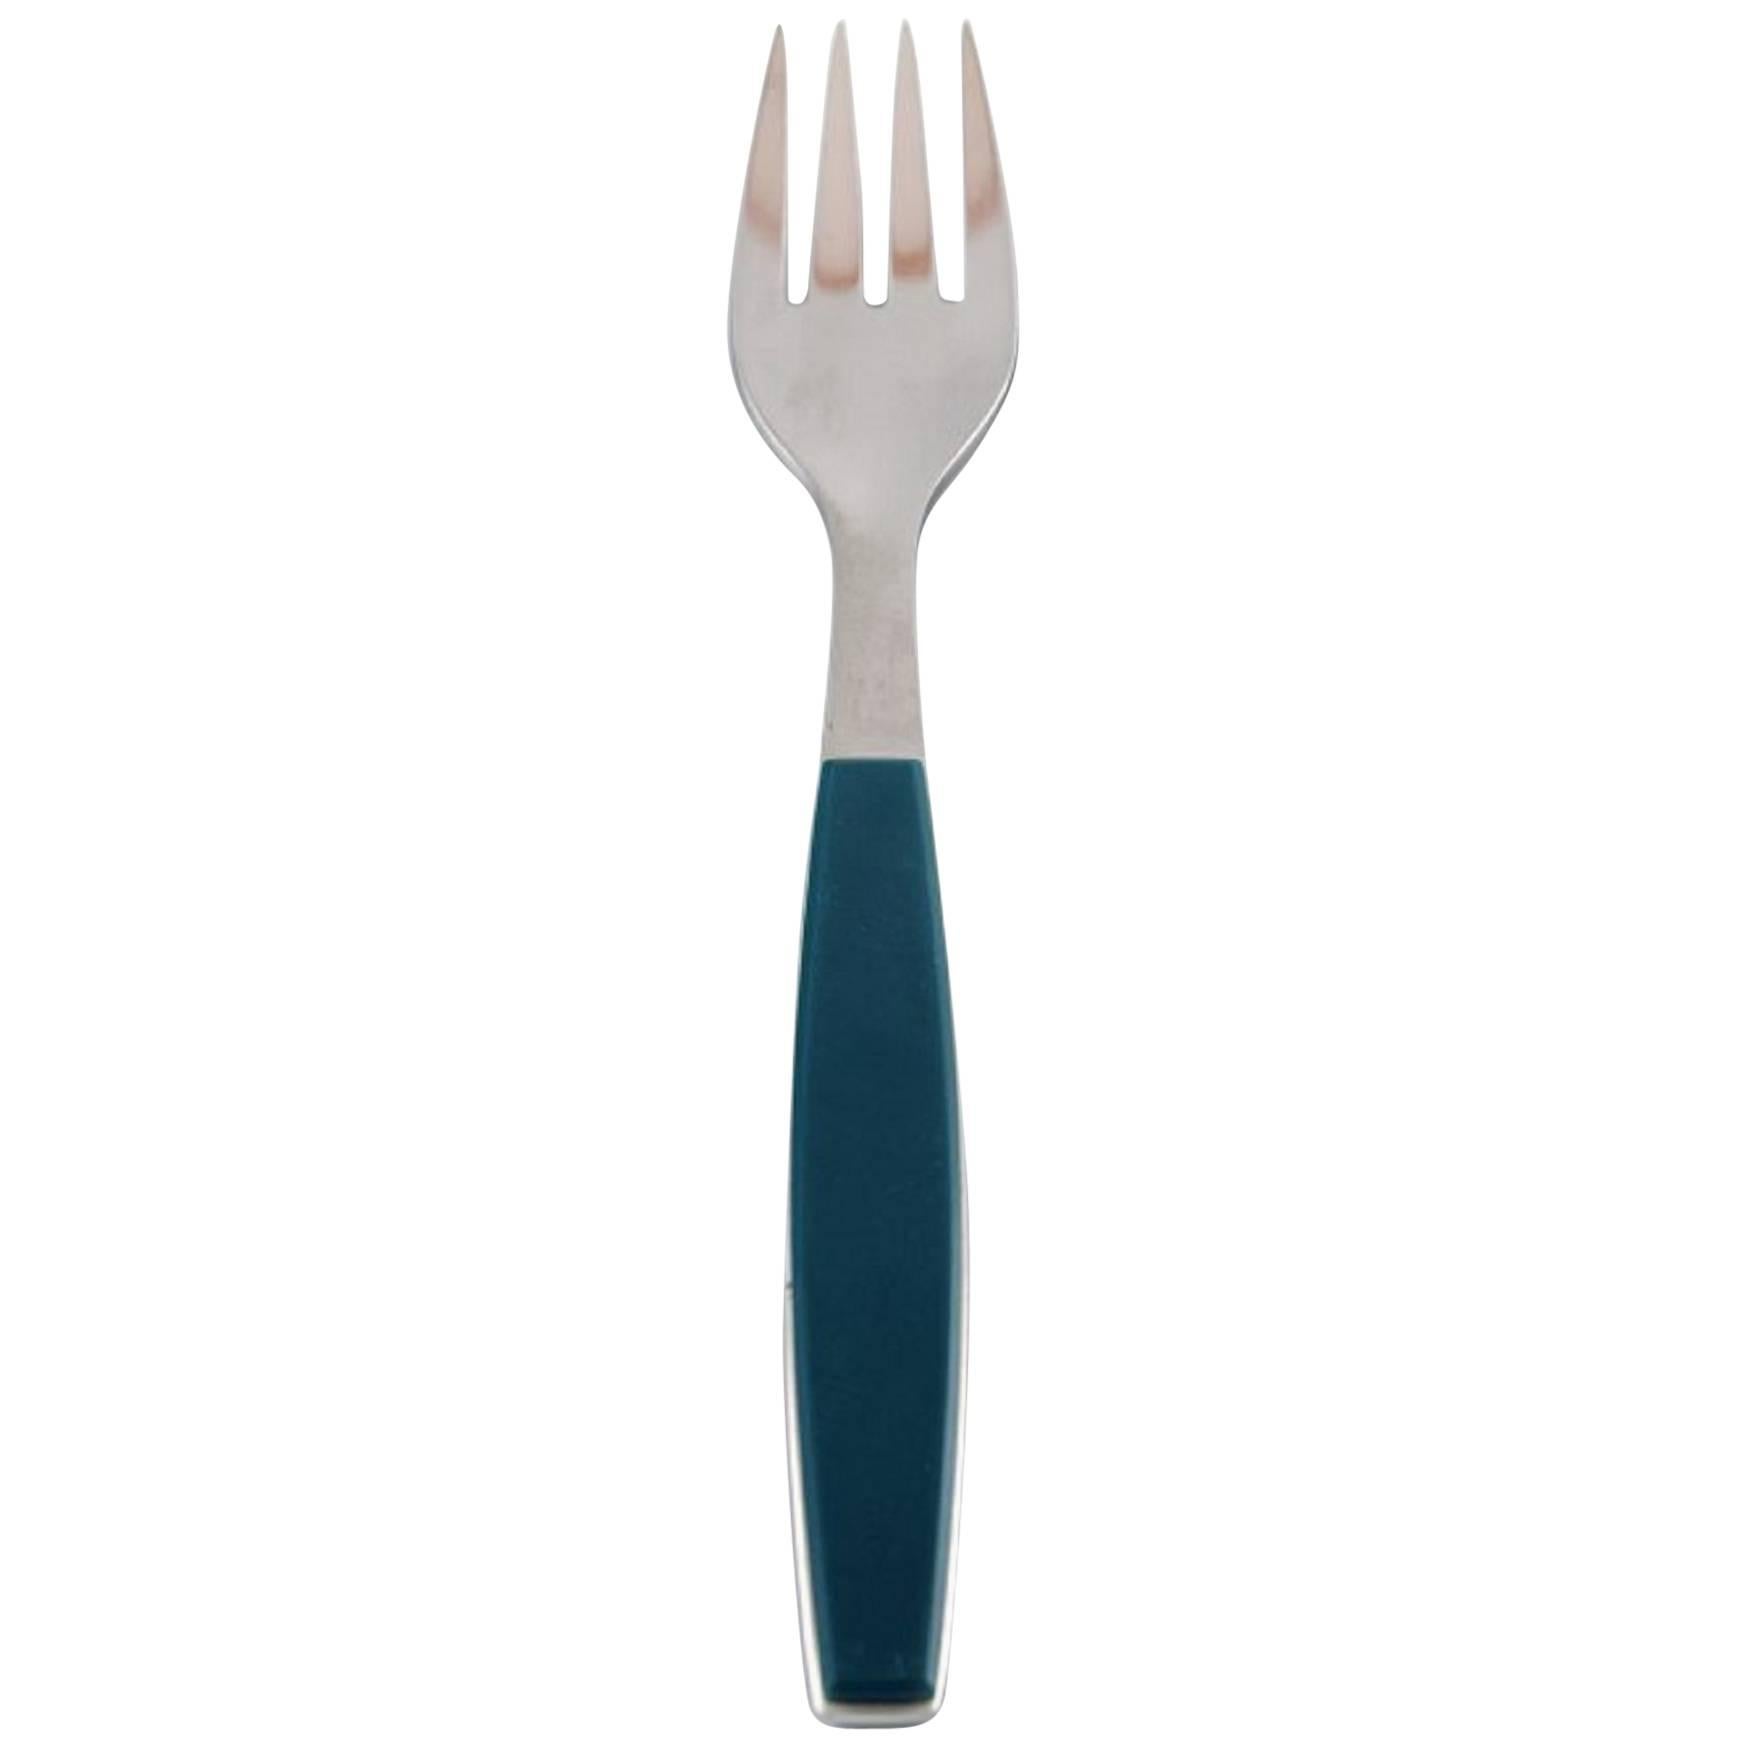 15 Dinner Forks Henning Koppel, Strata Cutlery Stainless Steel and Green Plastic